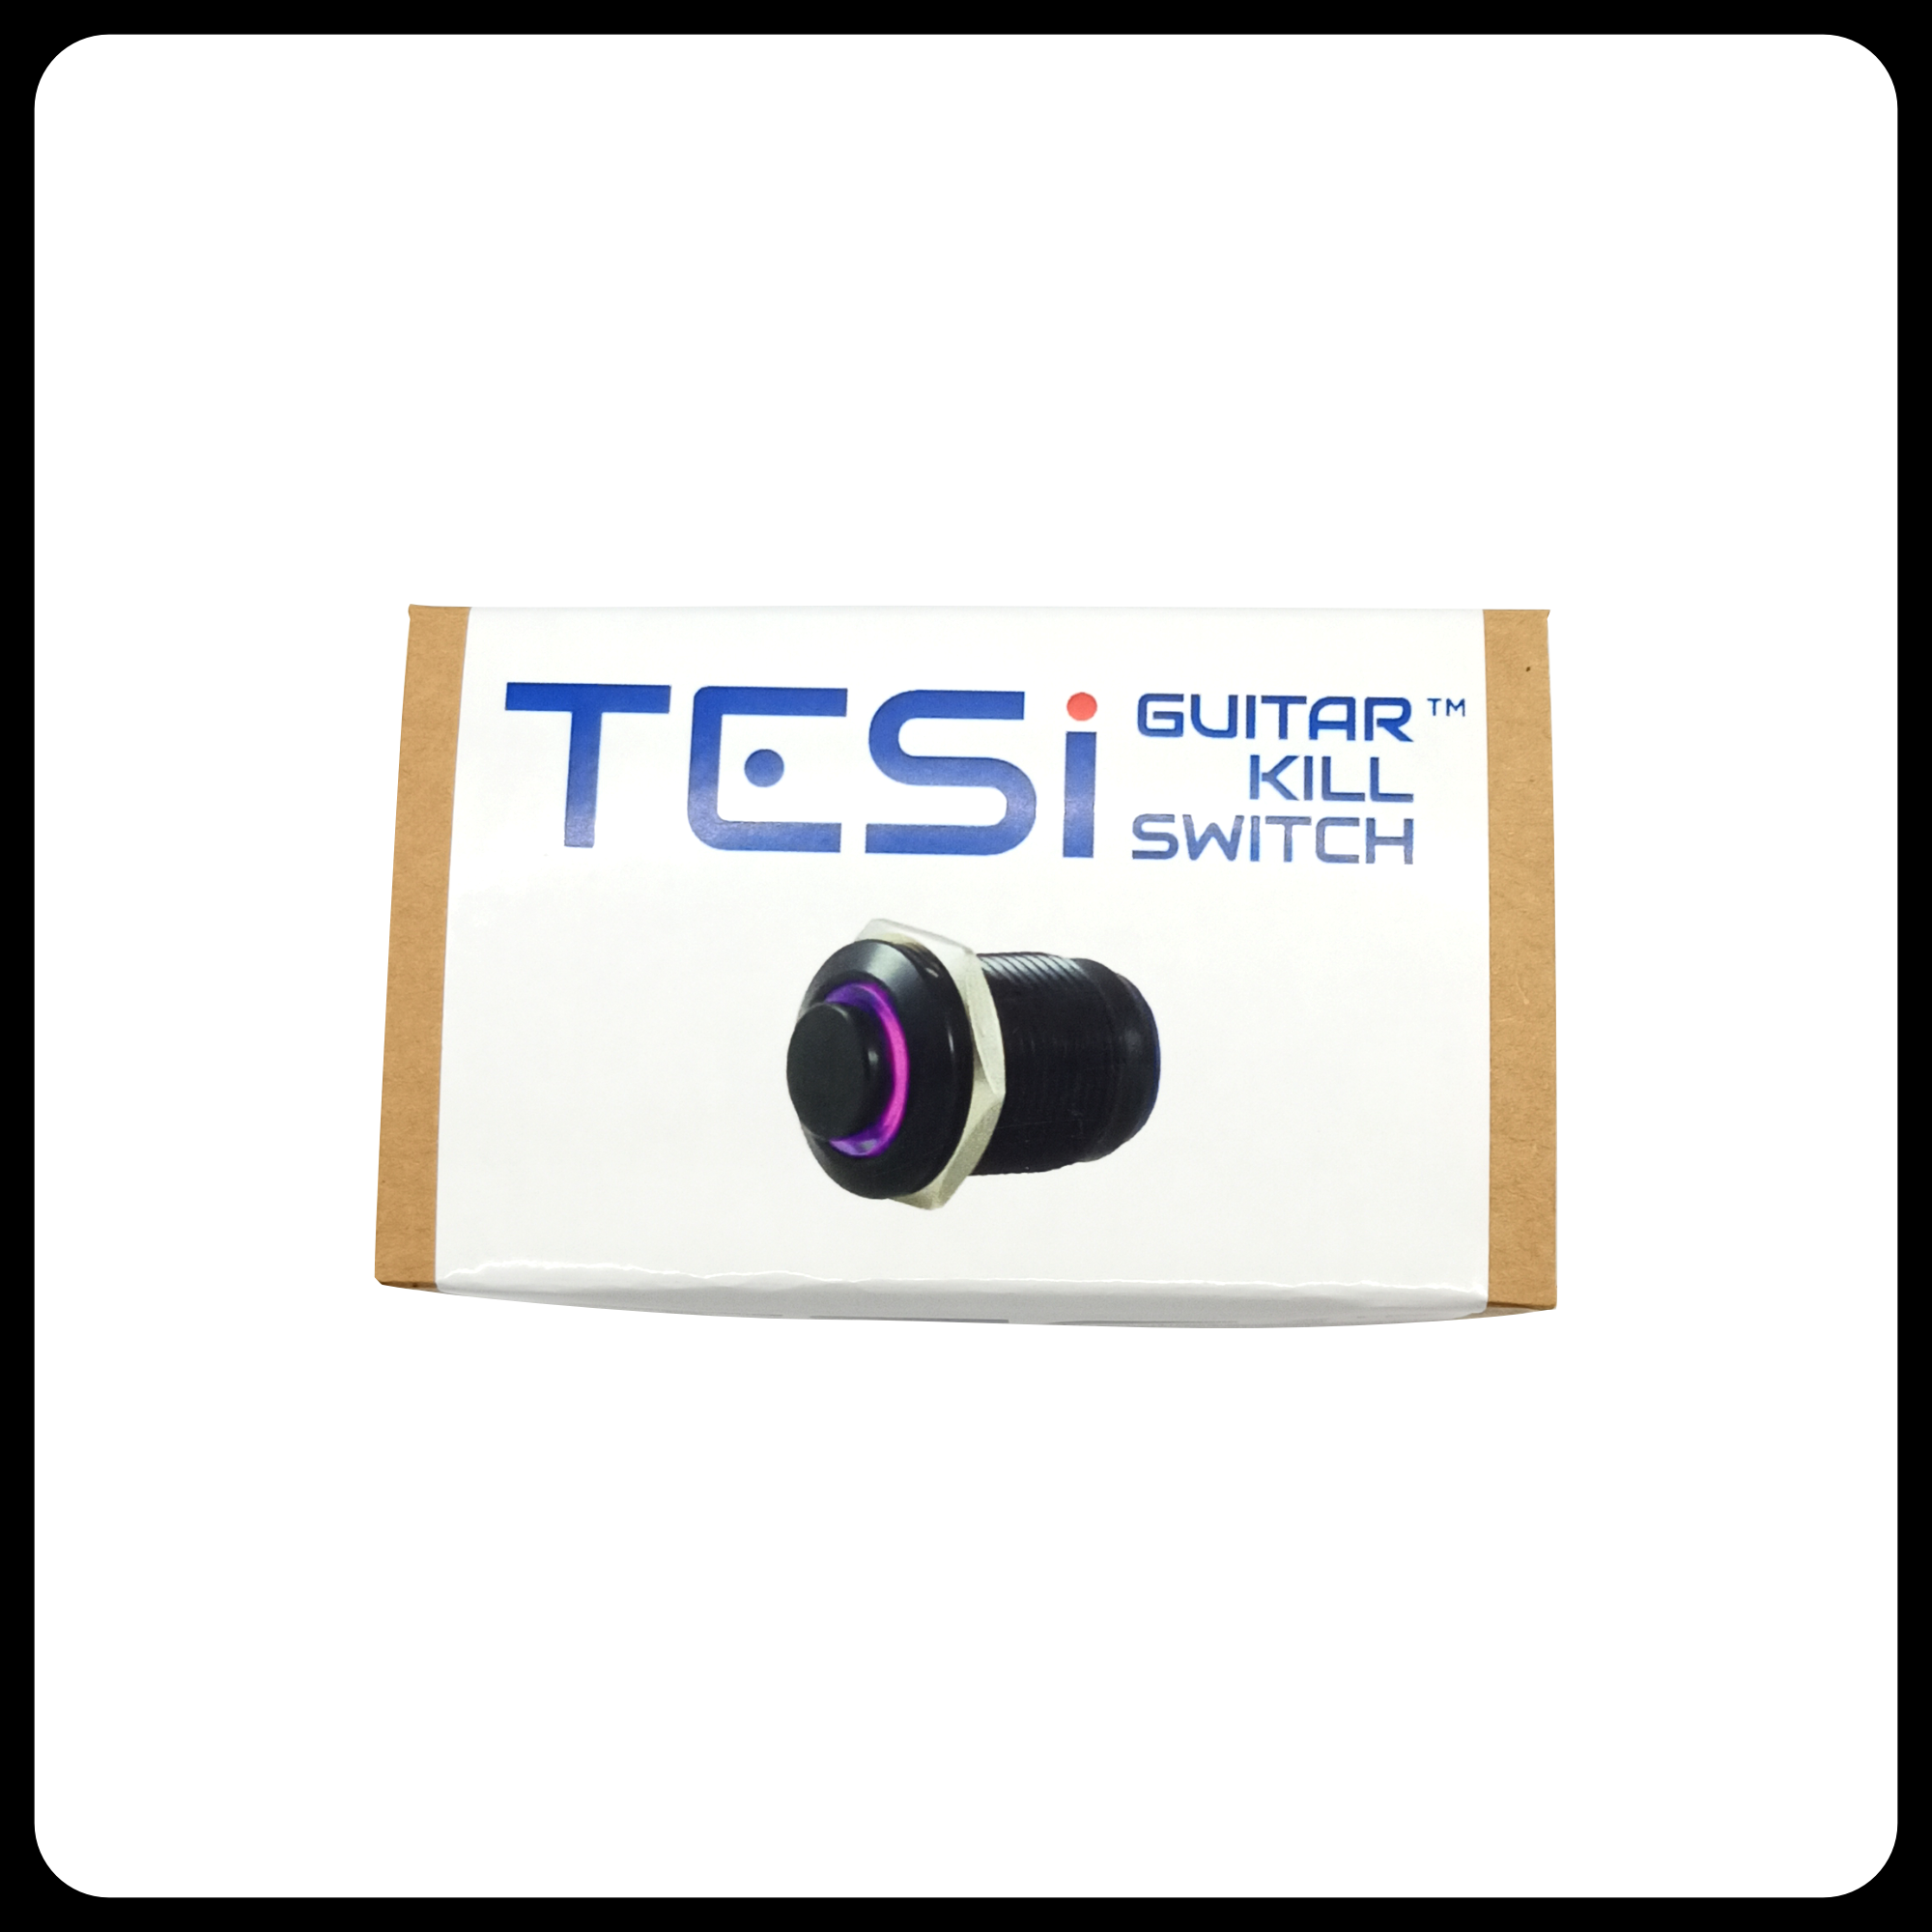 TESI Switch POCO 12MM LED Ring Guitar Kill Switch - Black/Blue